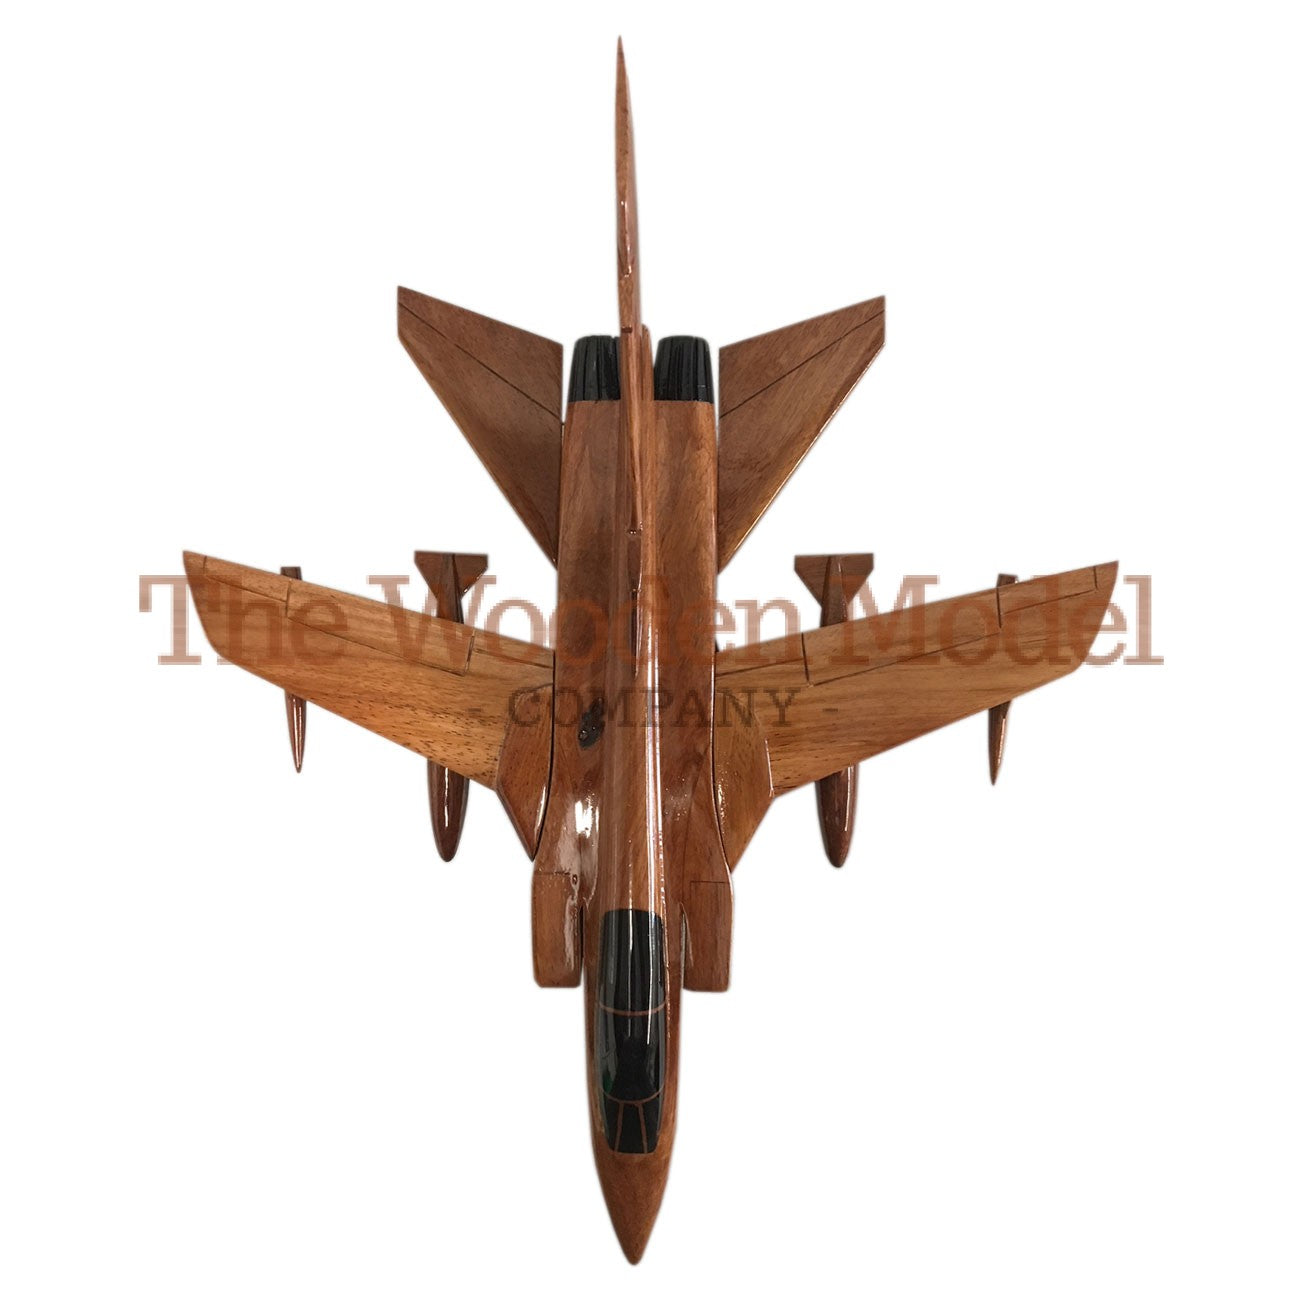 Panavia Tornado RAF GAF IAF RSAF Multirole Swing Wing Modern Fighter Aircraft Wooden Desktop Model